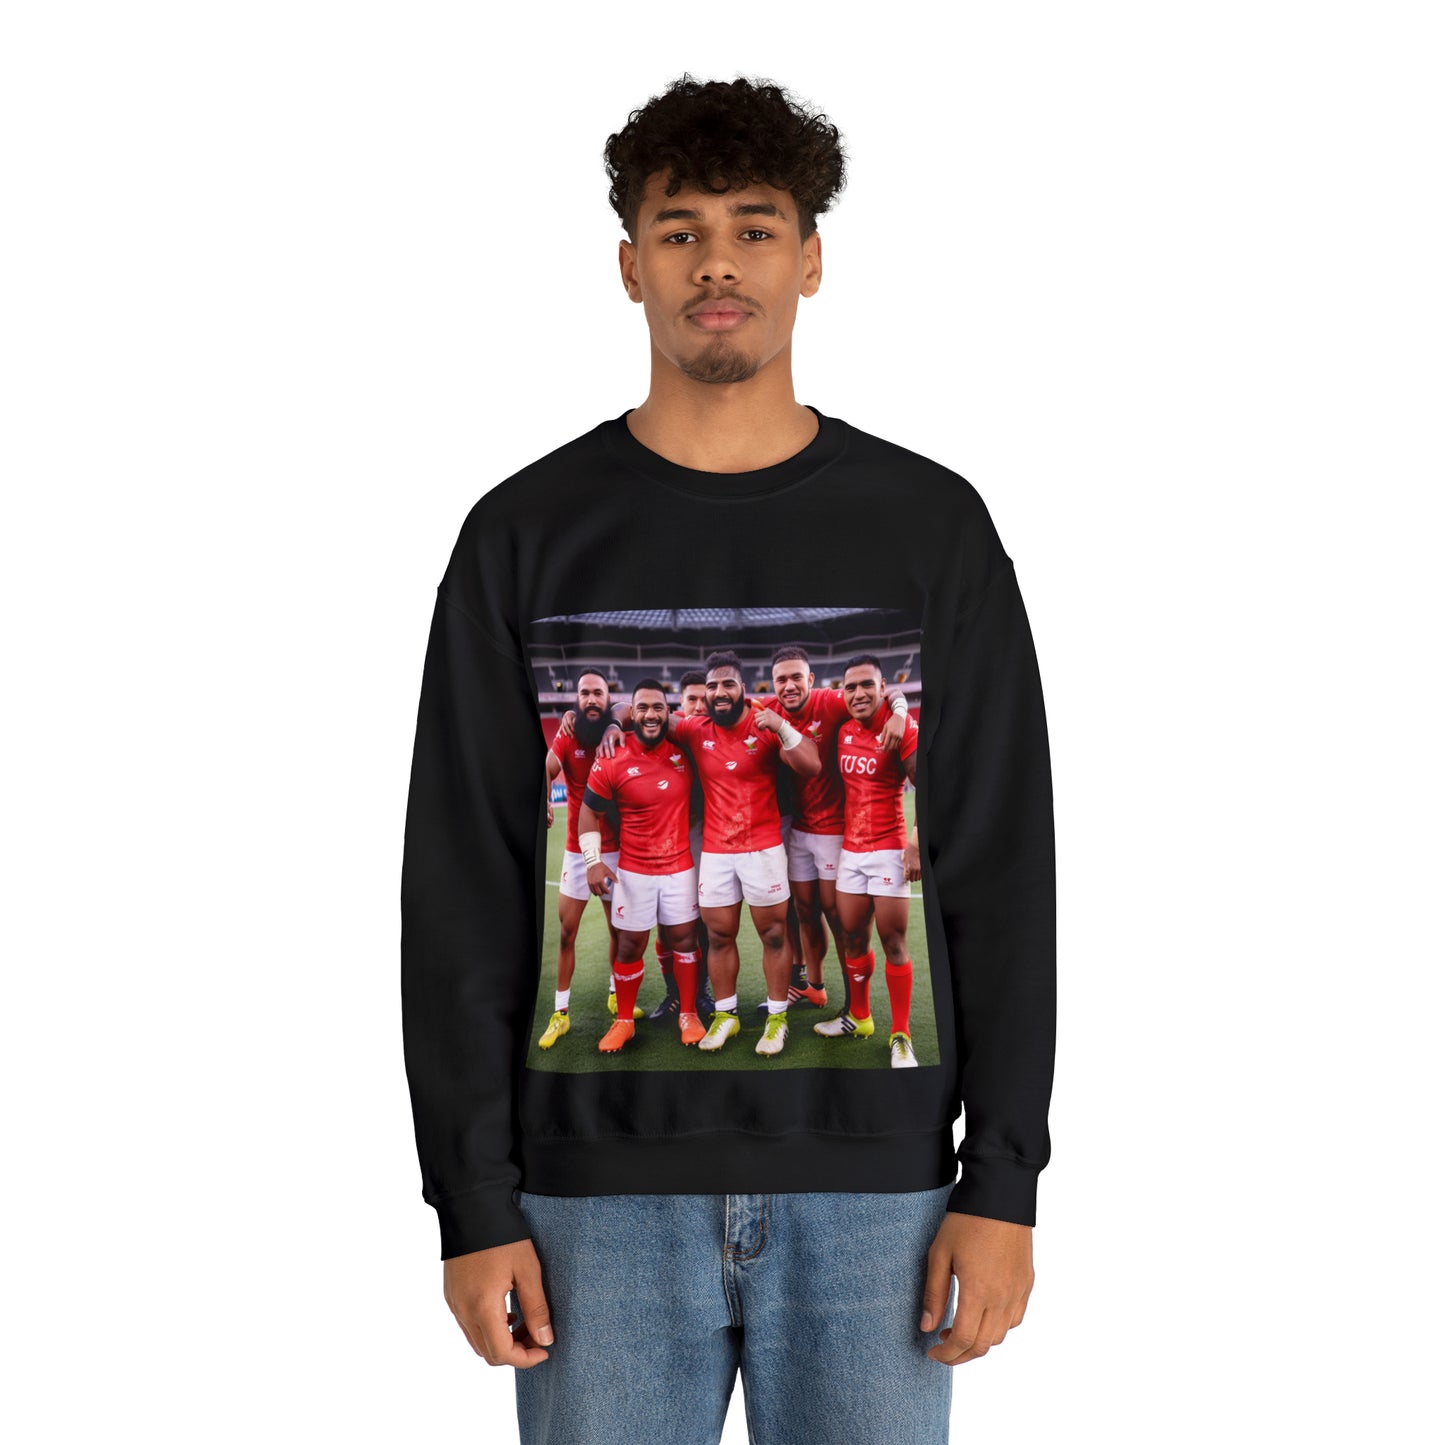 Post Match Tonga - black sweatshirt